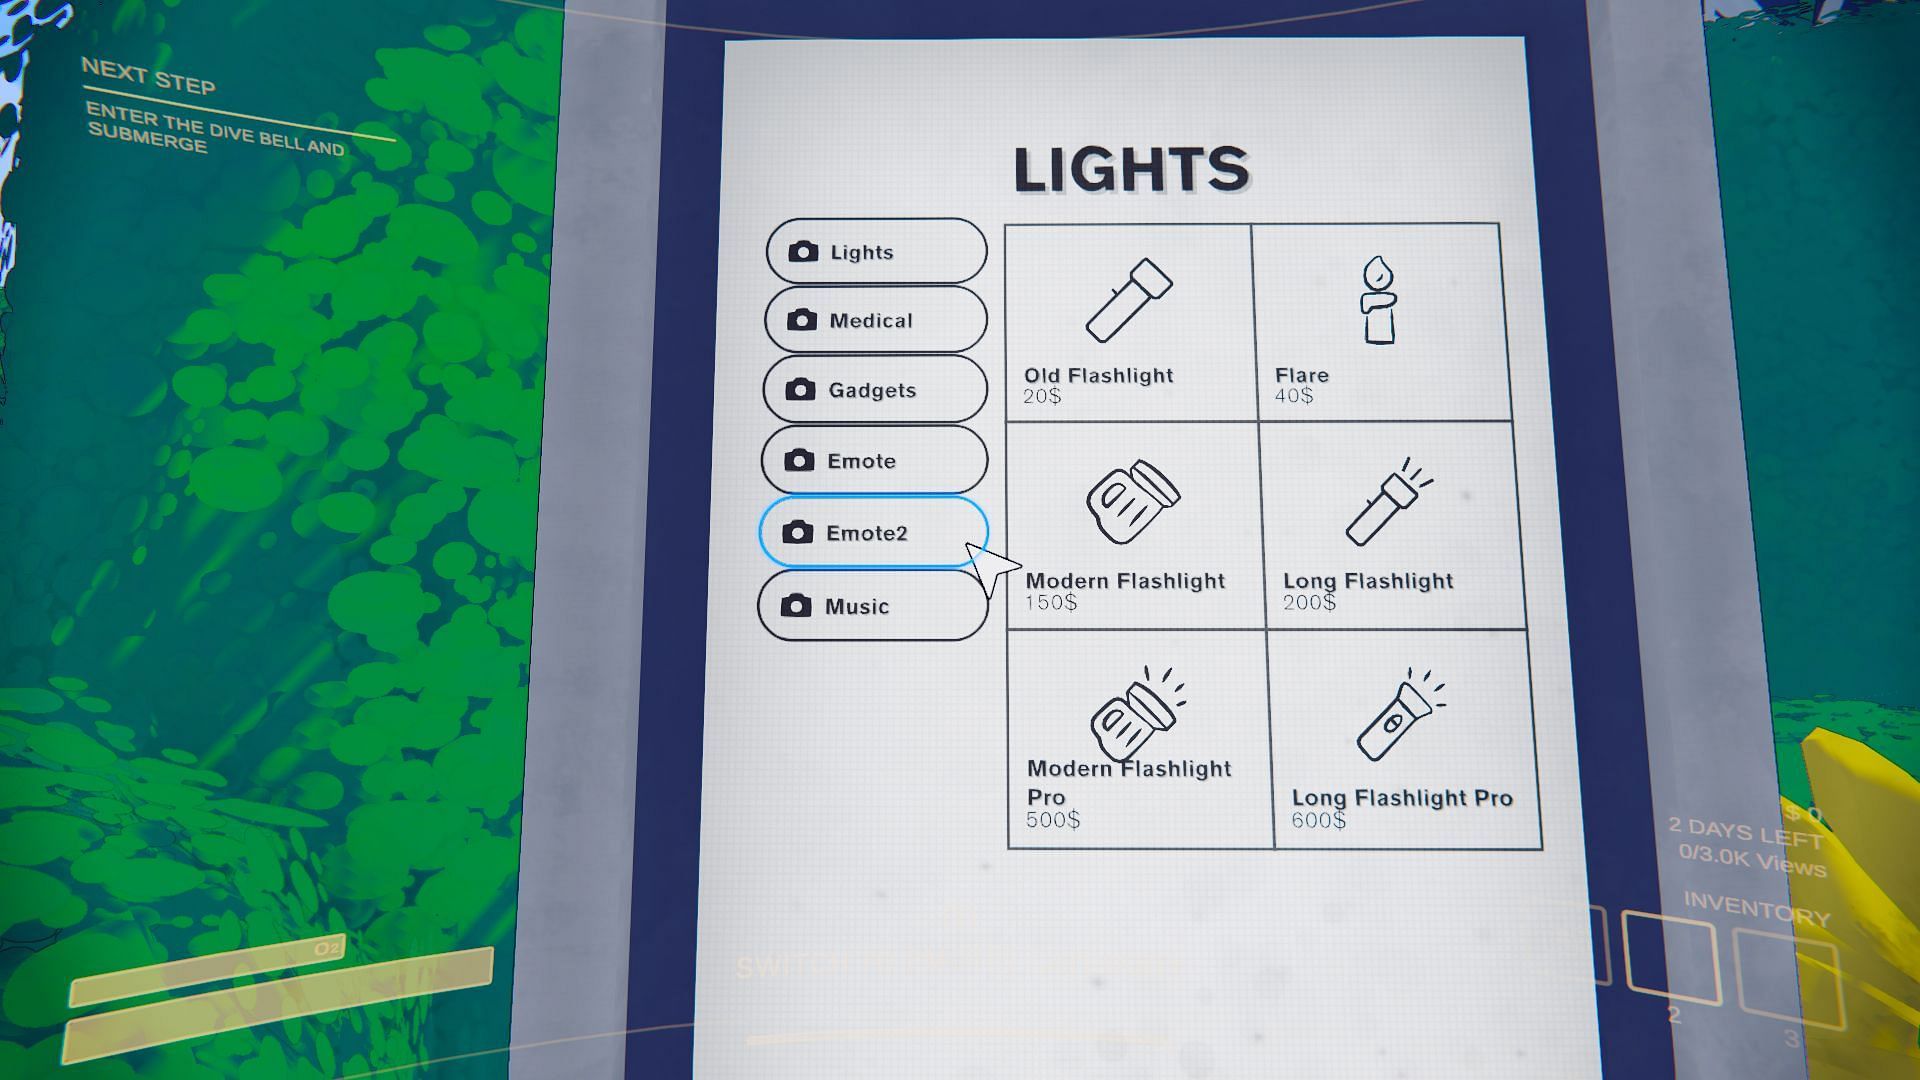 Lights upgrades and cost (Image via Landfall Games)